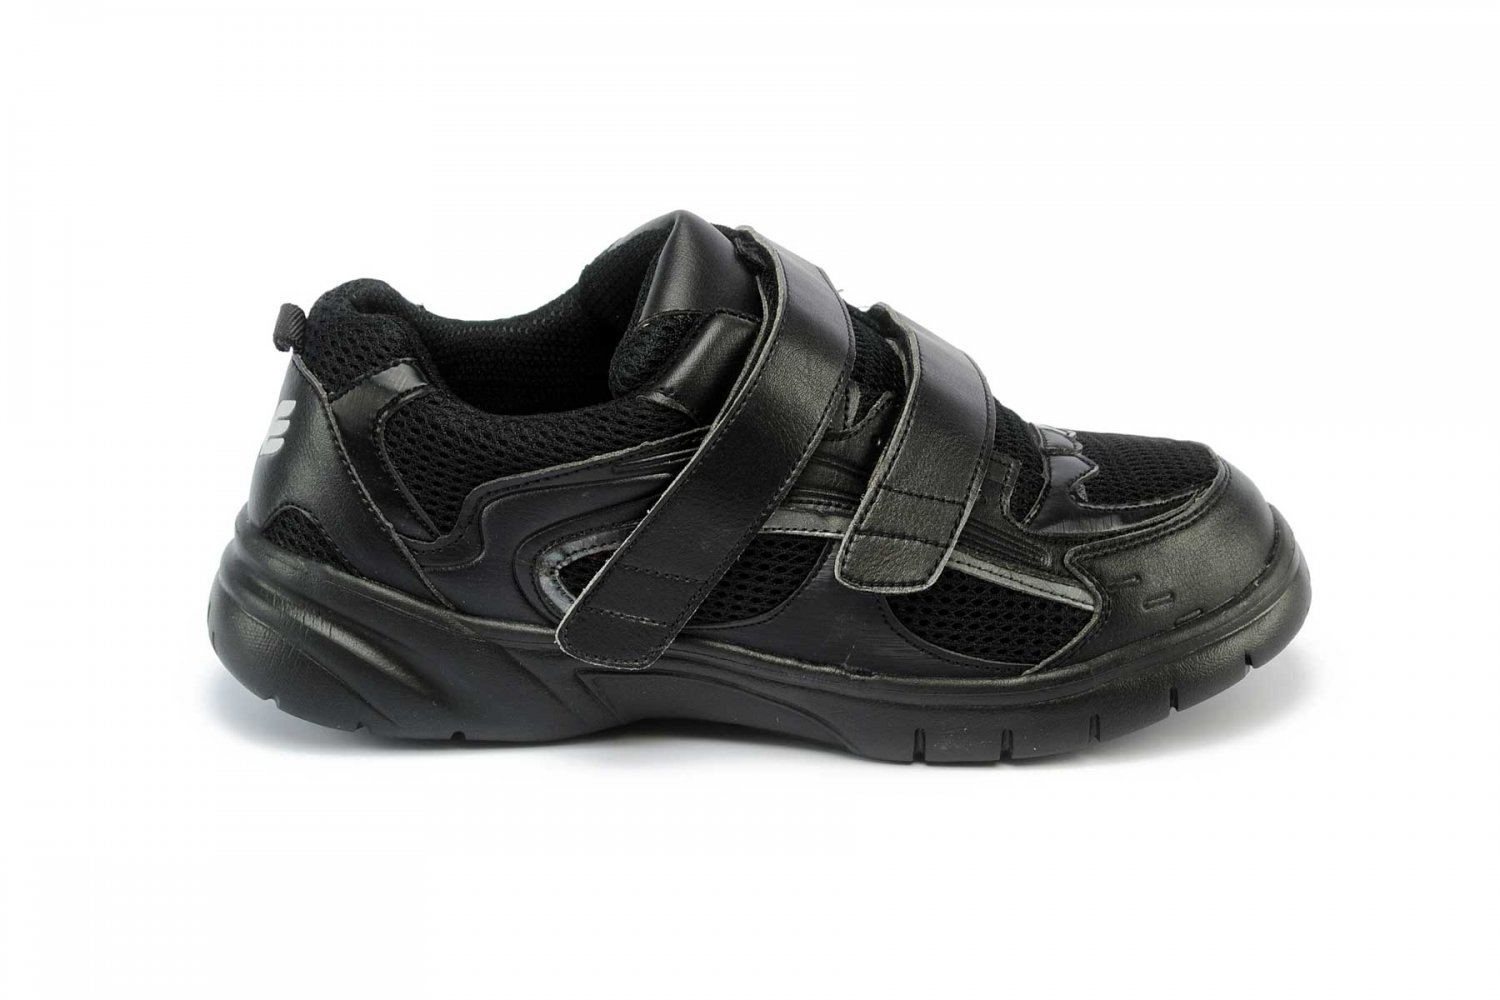 Mt. Emey 9701-V - Men's Extra-depth Athletic/Walking Strap Shoes - Free